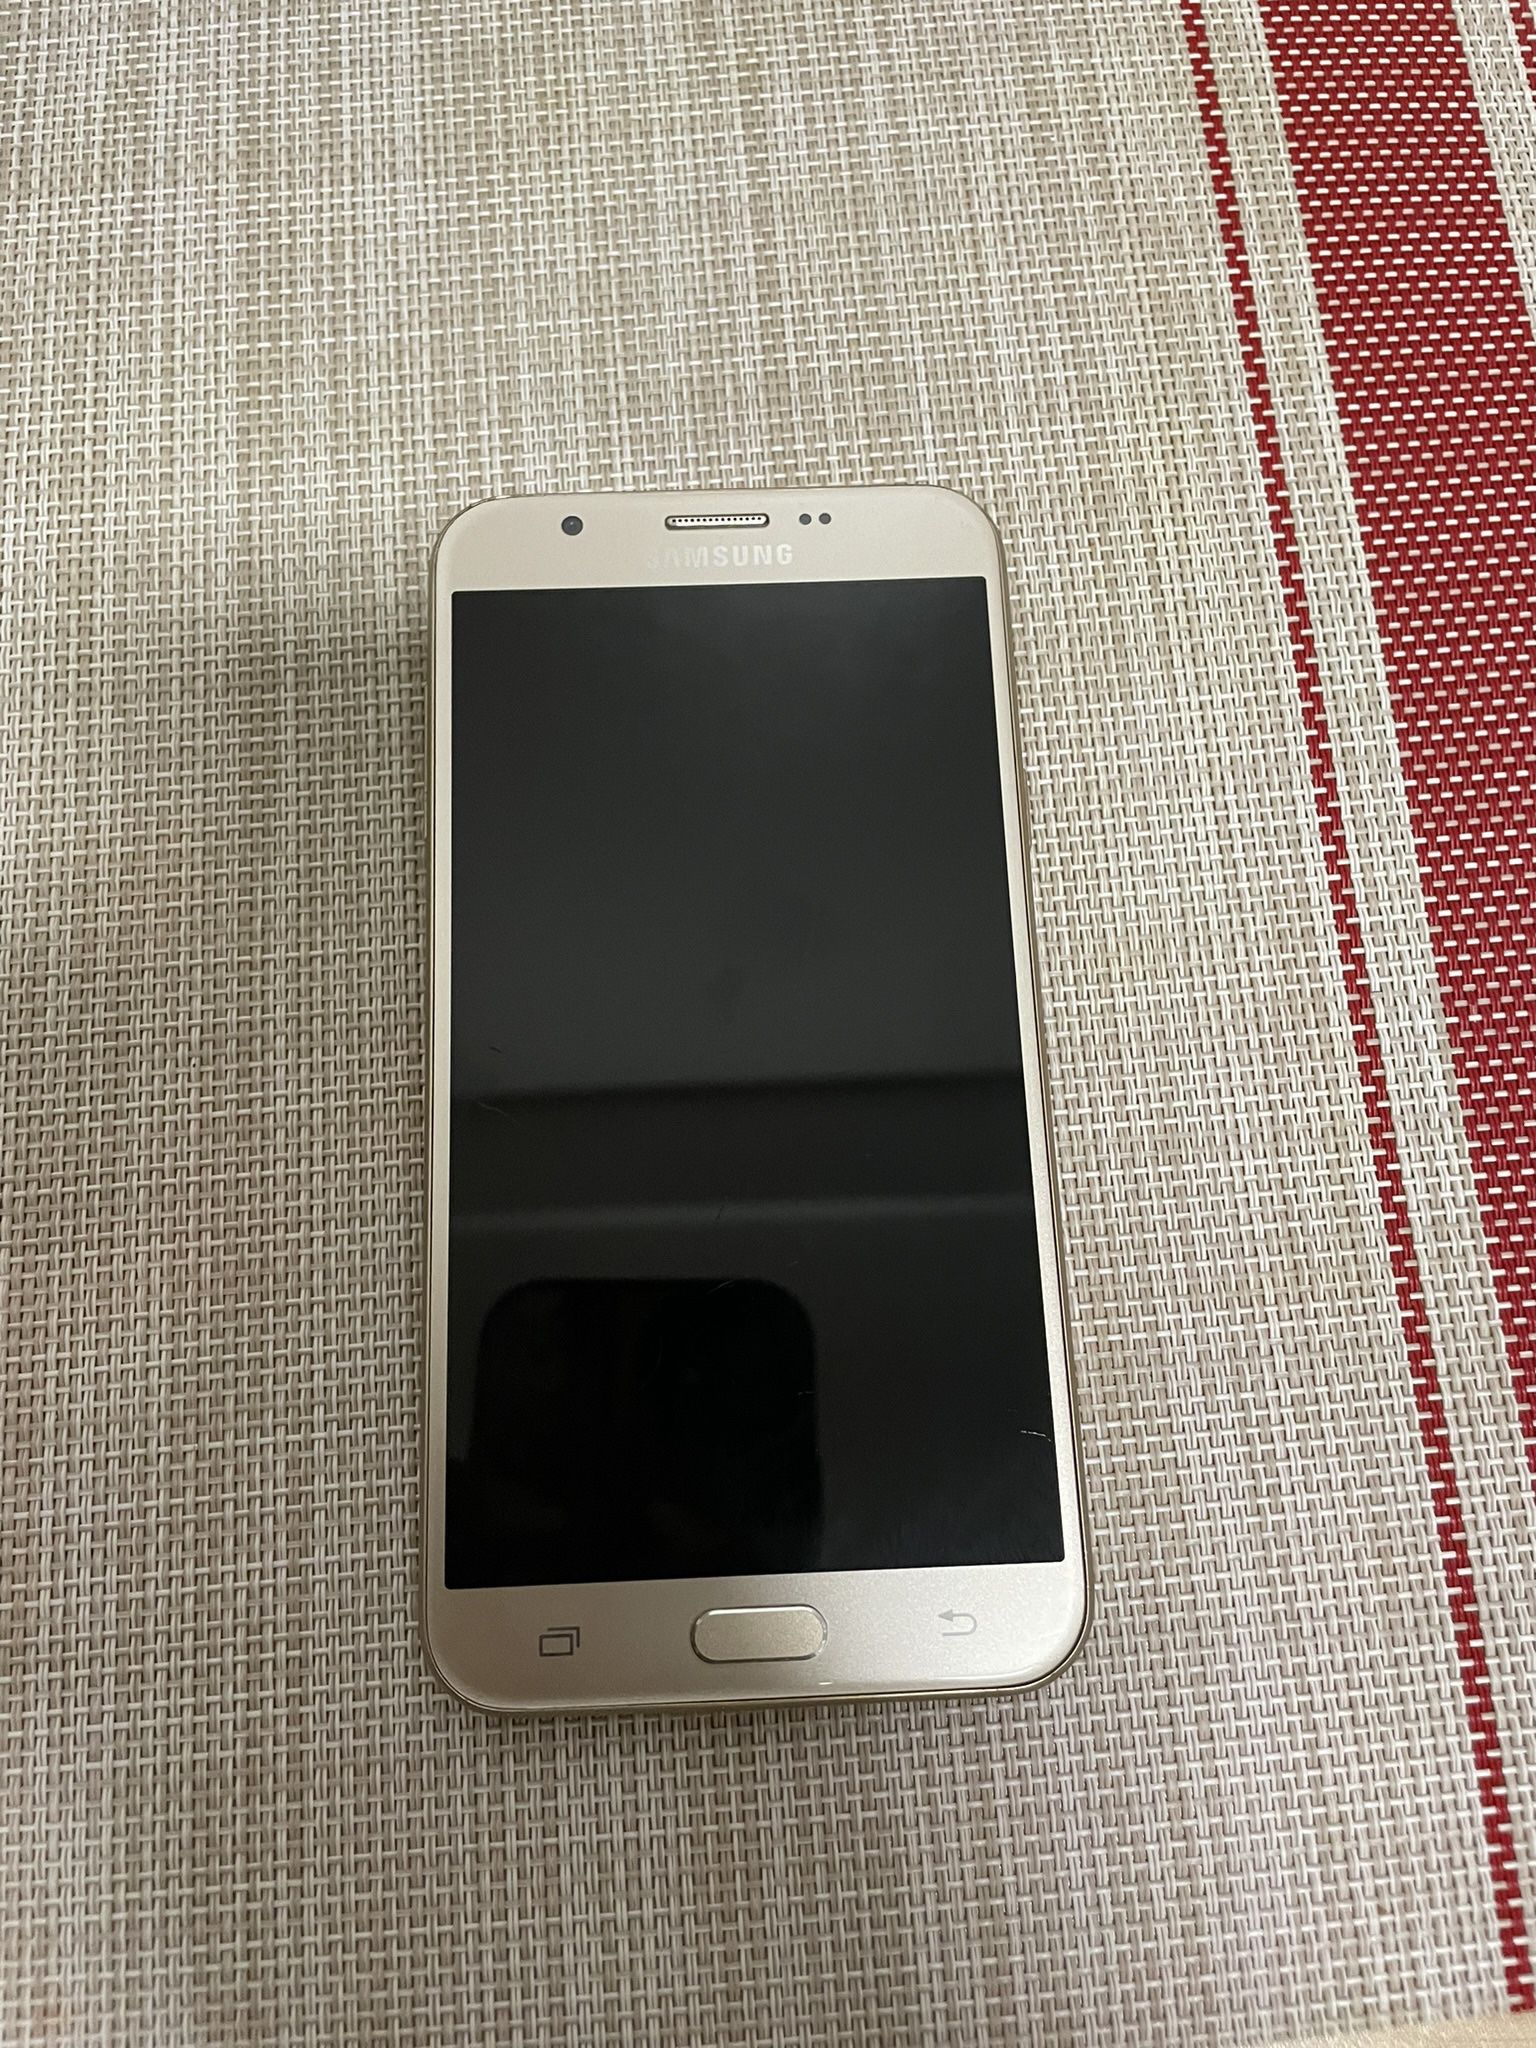  Samsung Galaxy J7 Prime (Gold, 32GB)